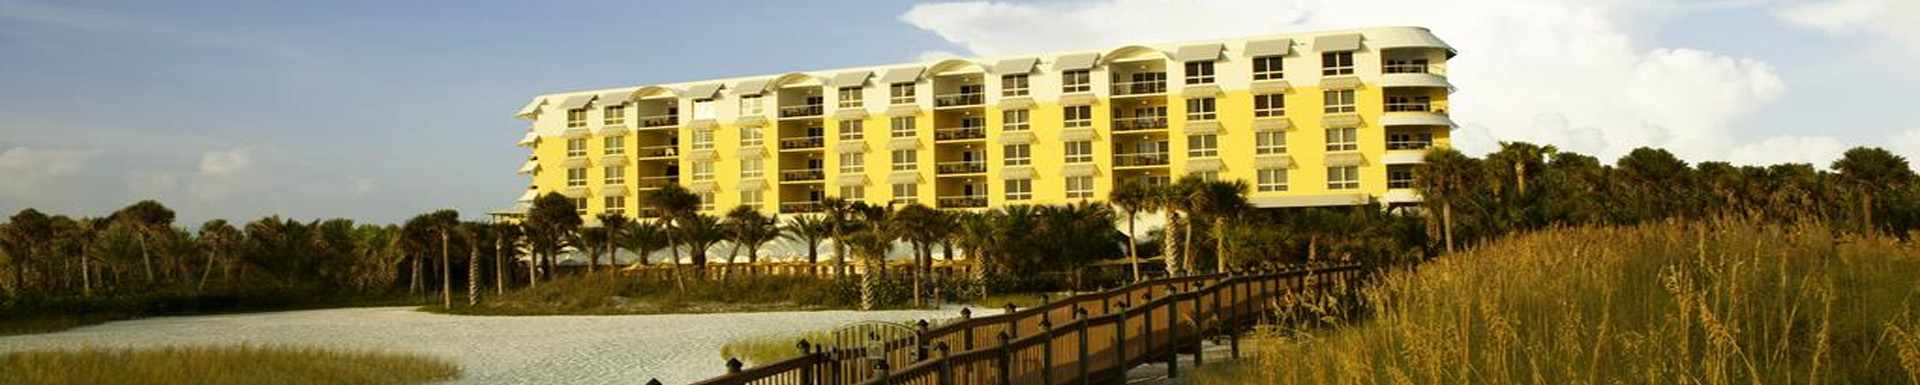 Hyatt Residence Club Sarasota, Siesta Key Beach